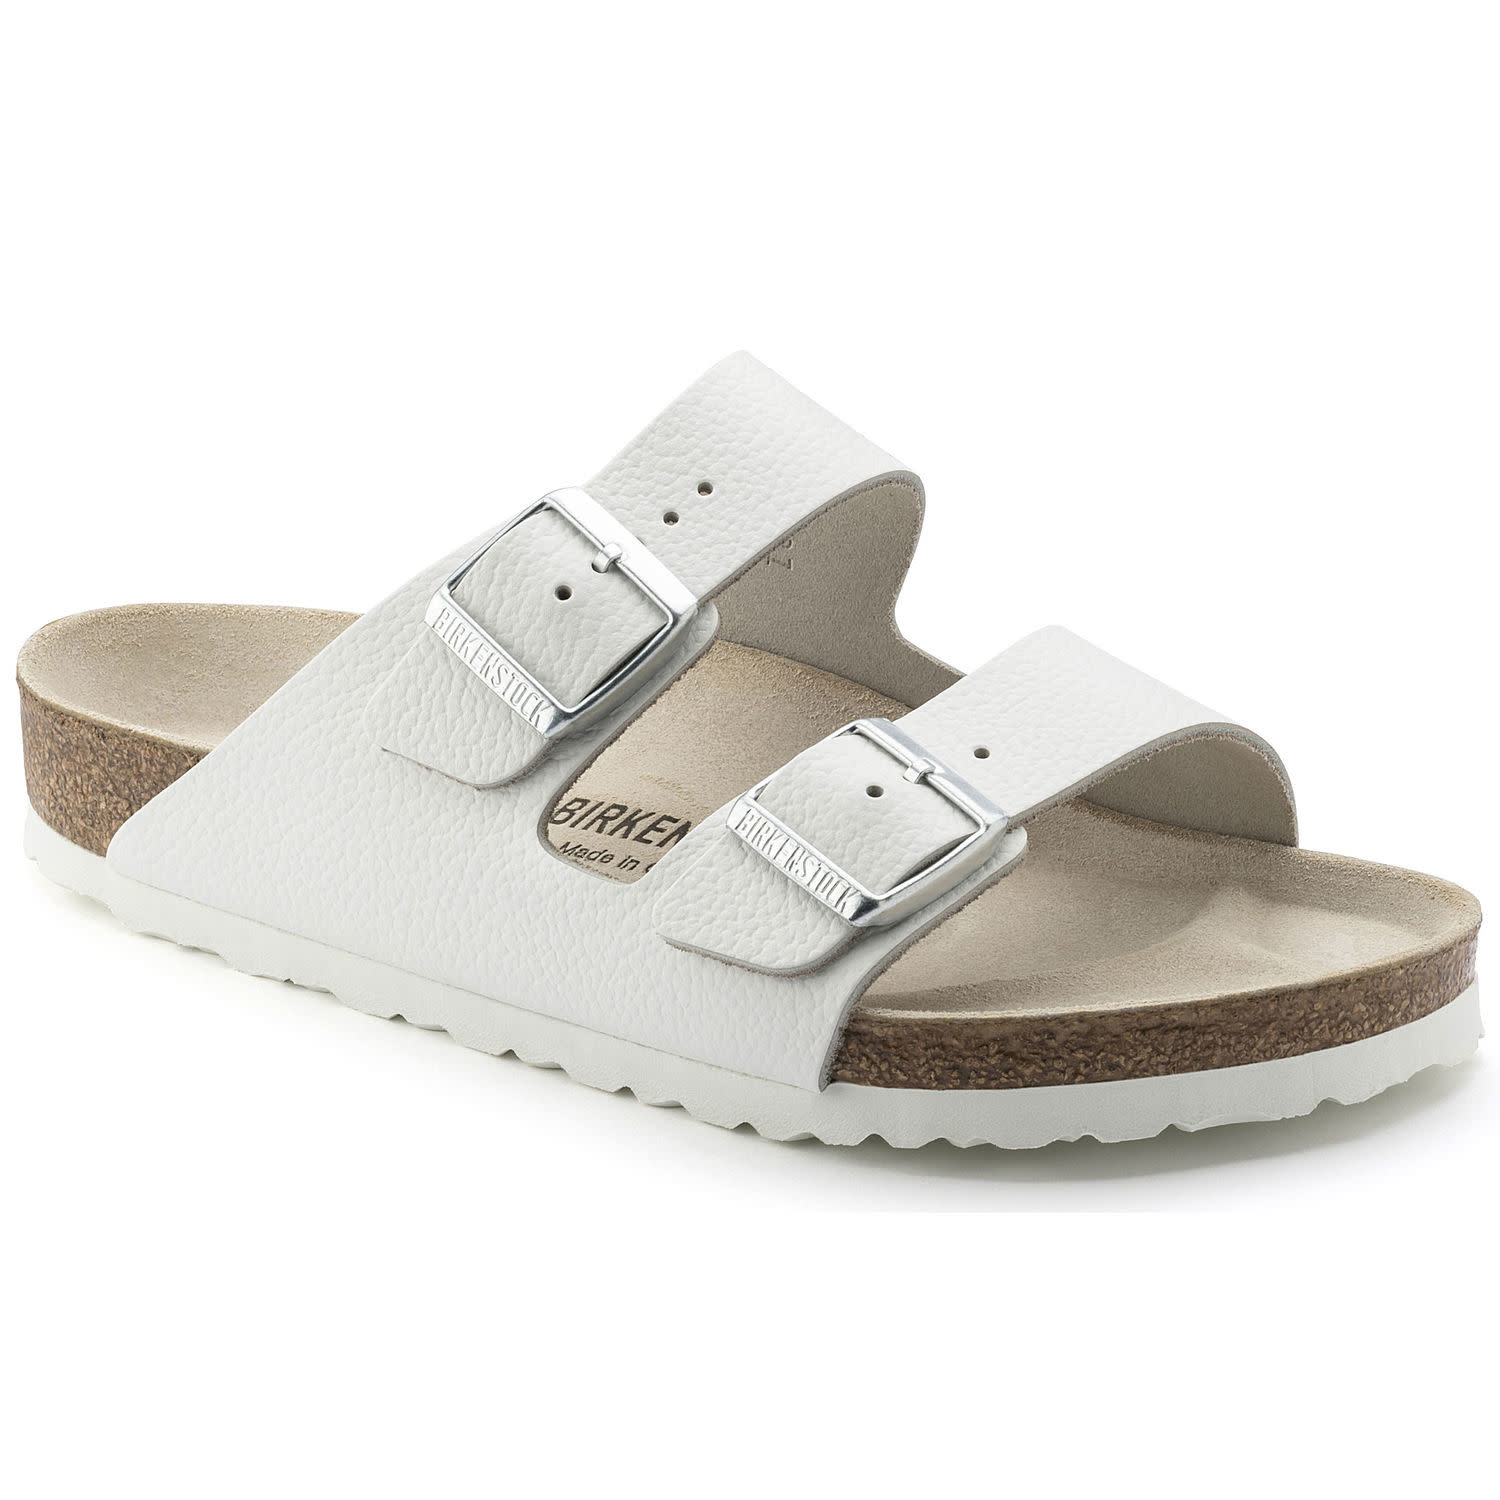 white leather birkenstock sandals